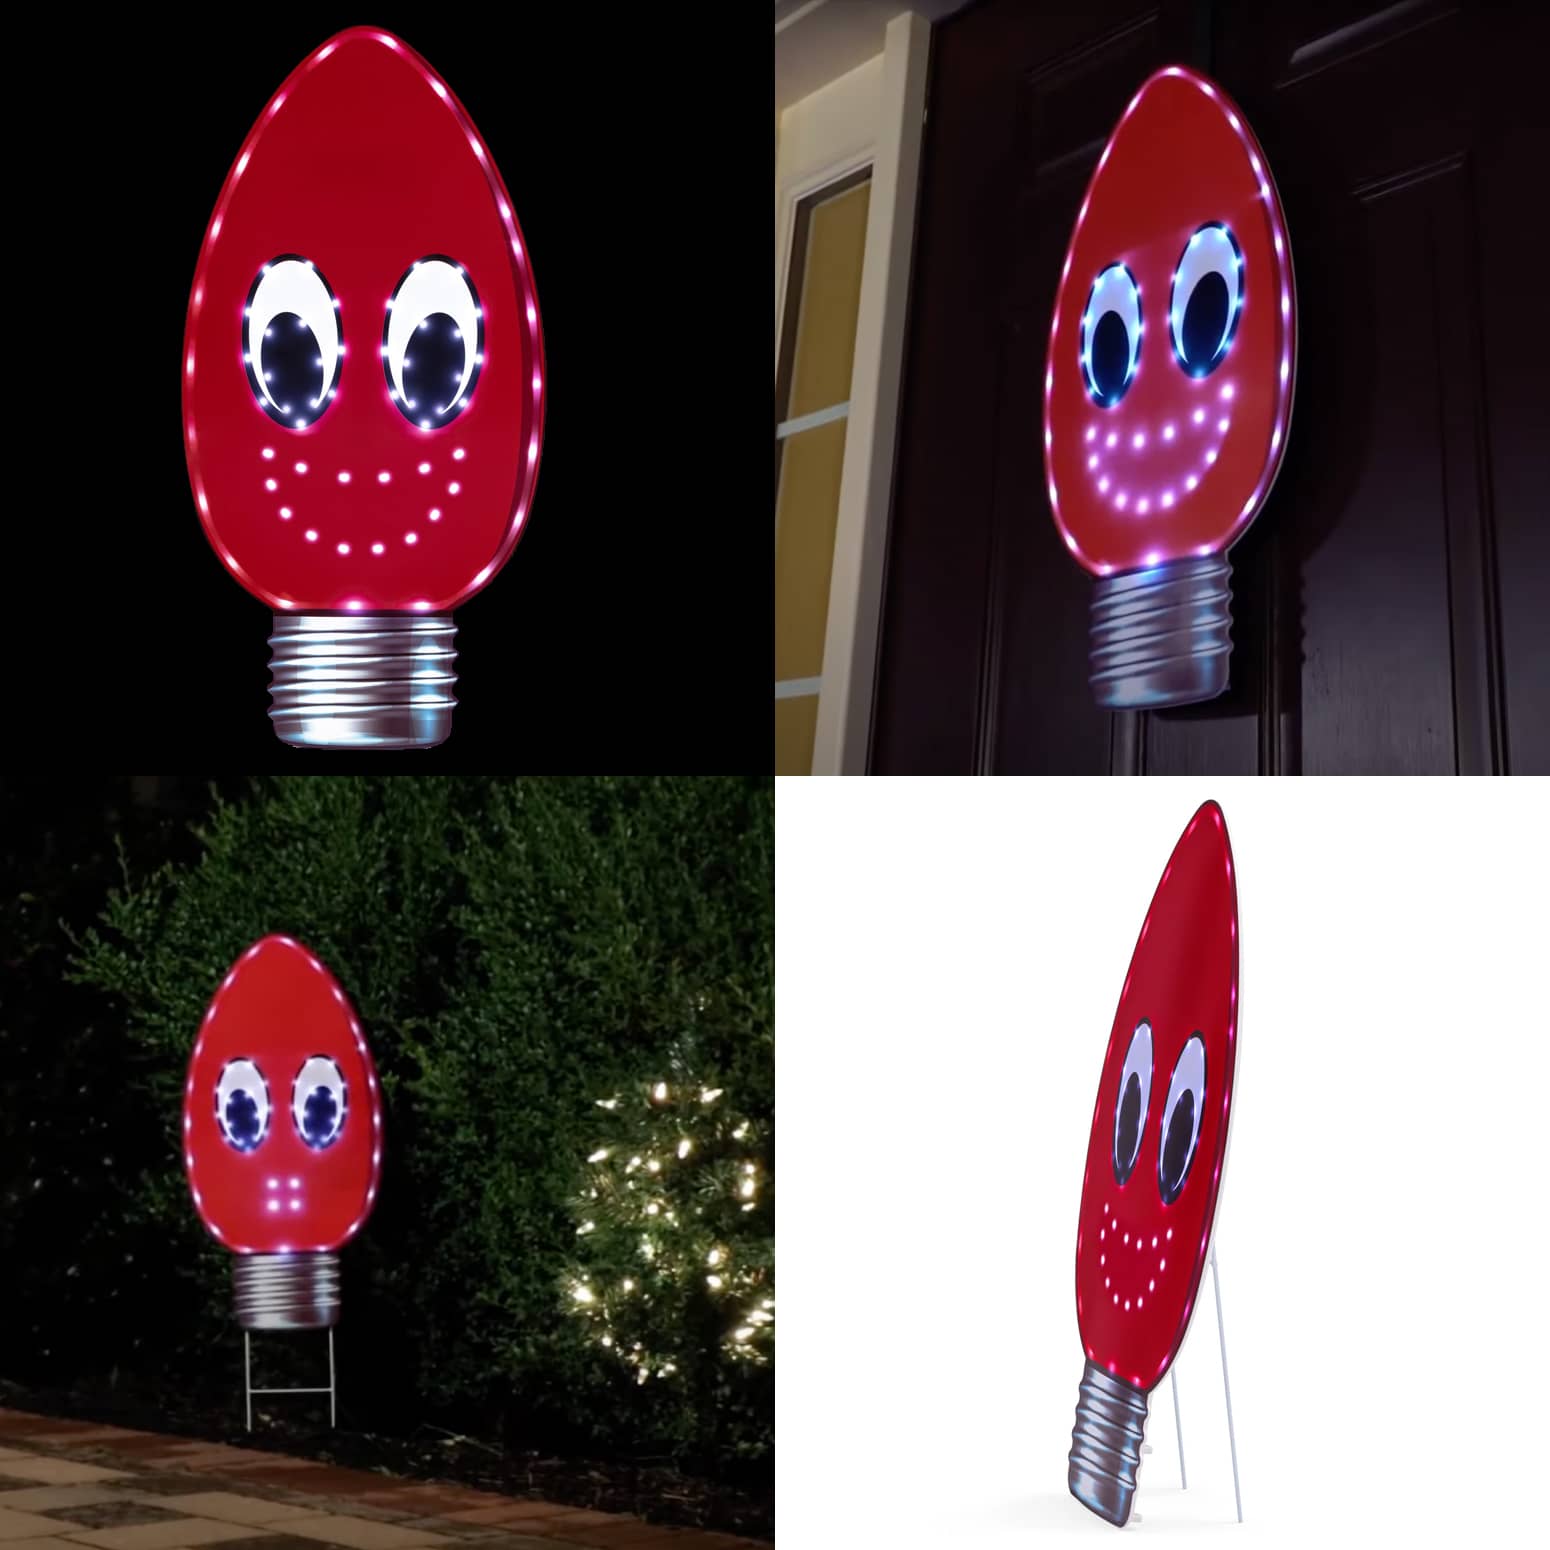 Giant Outdoor Illuminated Singing and Talking Vintage C9 Light Bulb